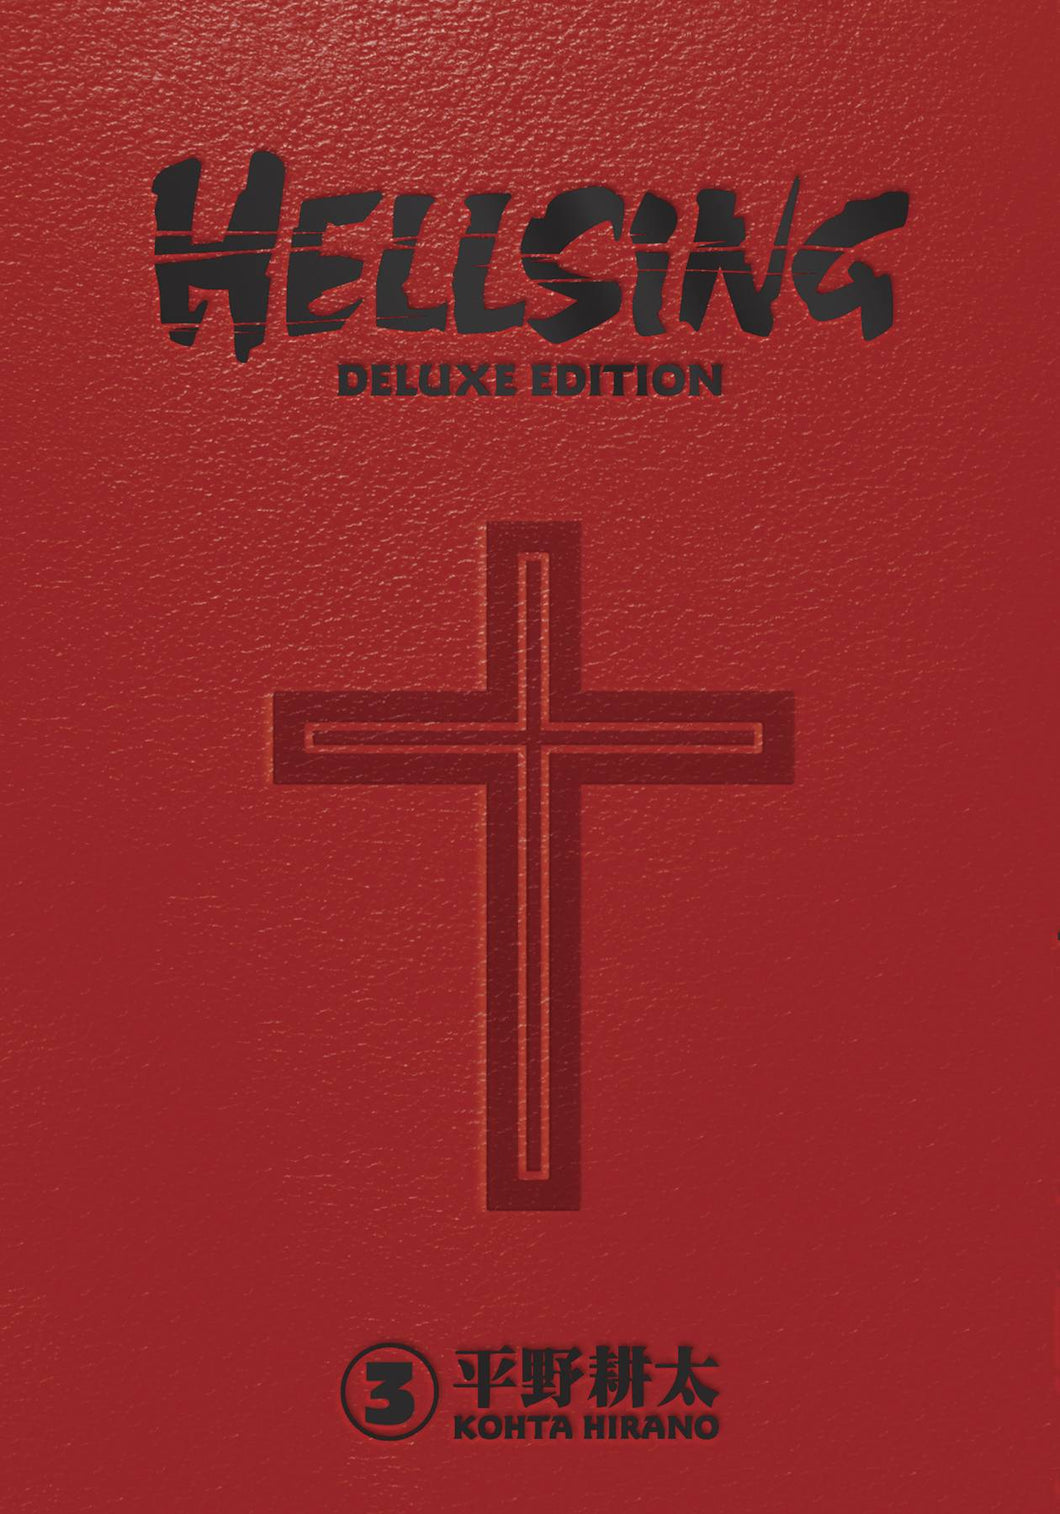 Hellsing Deluxe Edition HC Vol 03 - Books